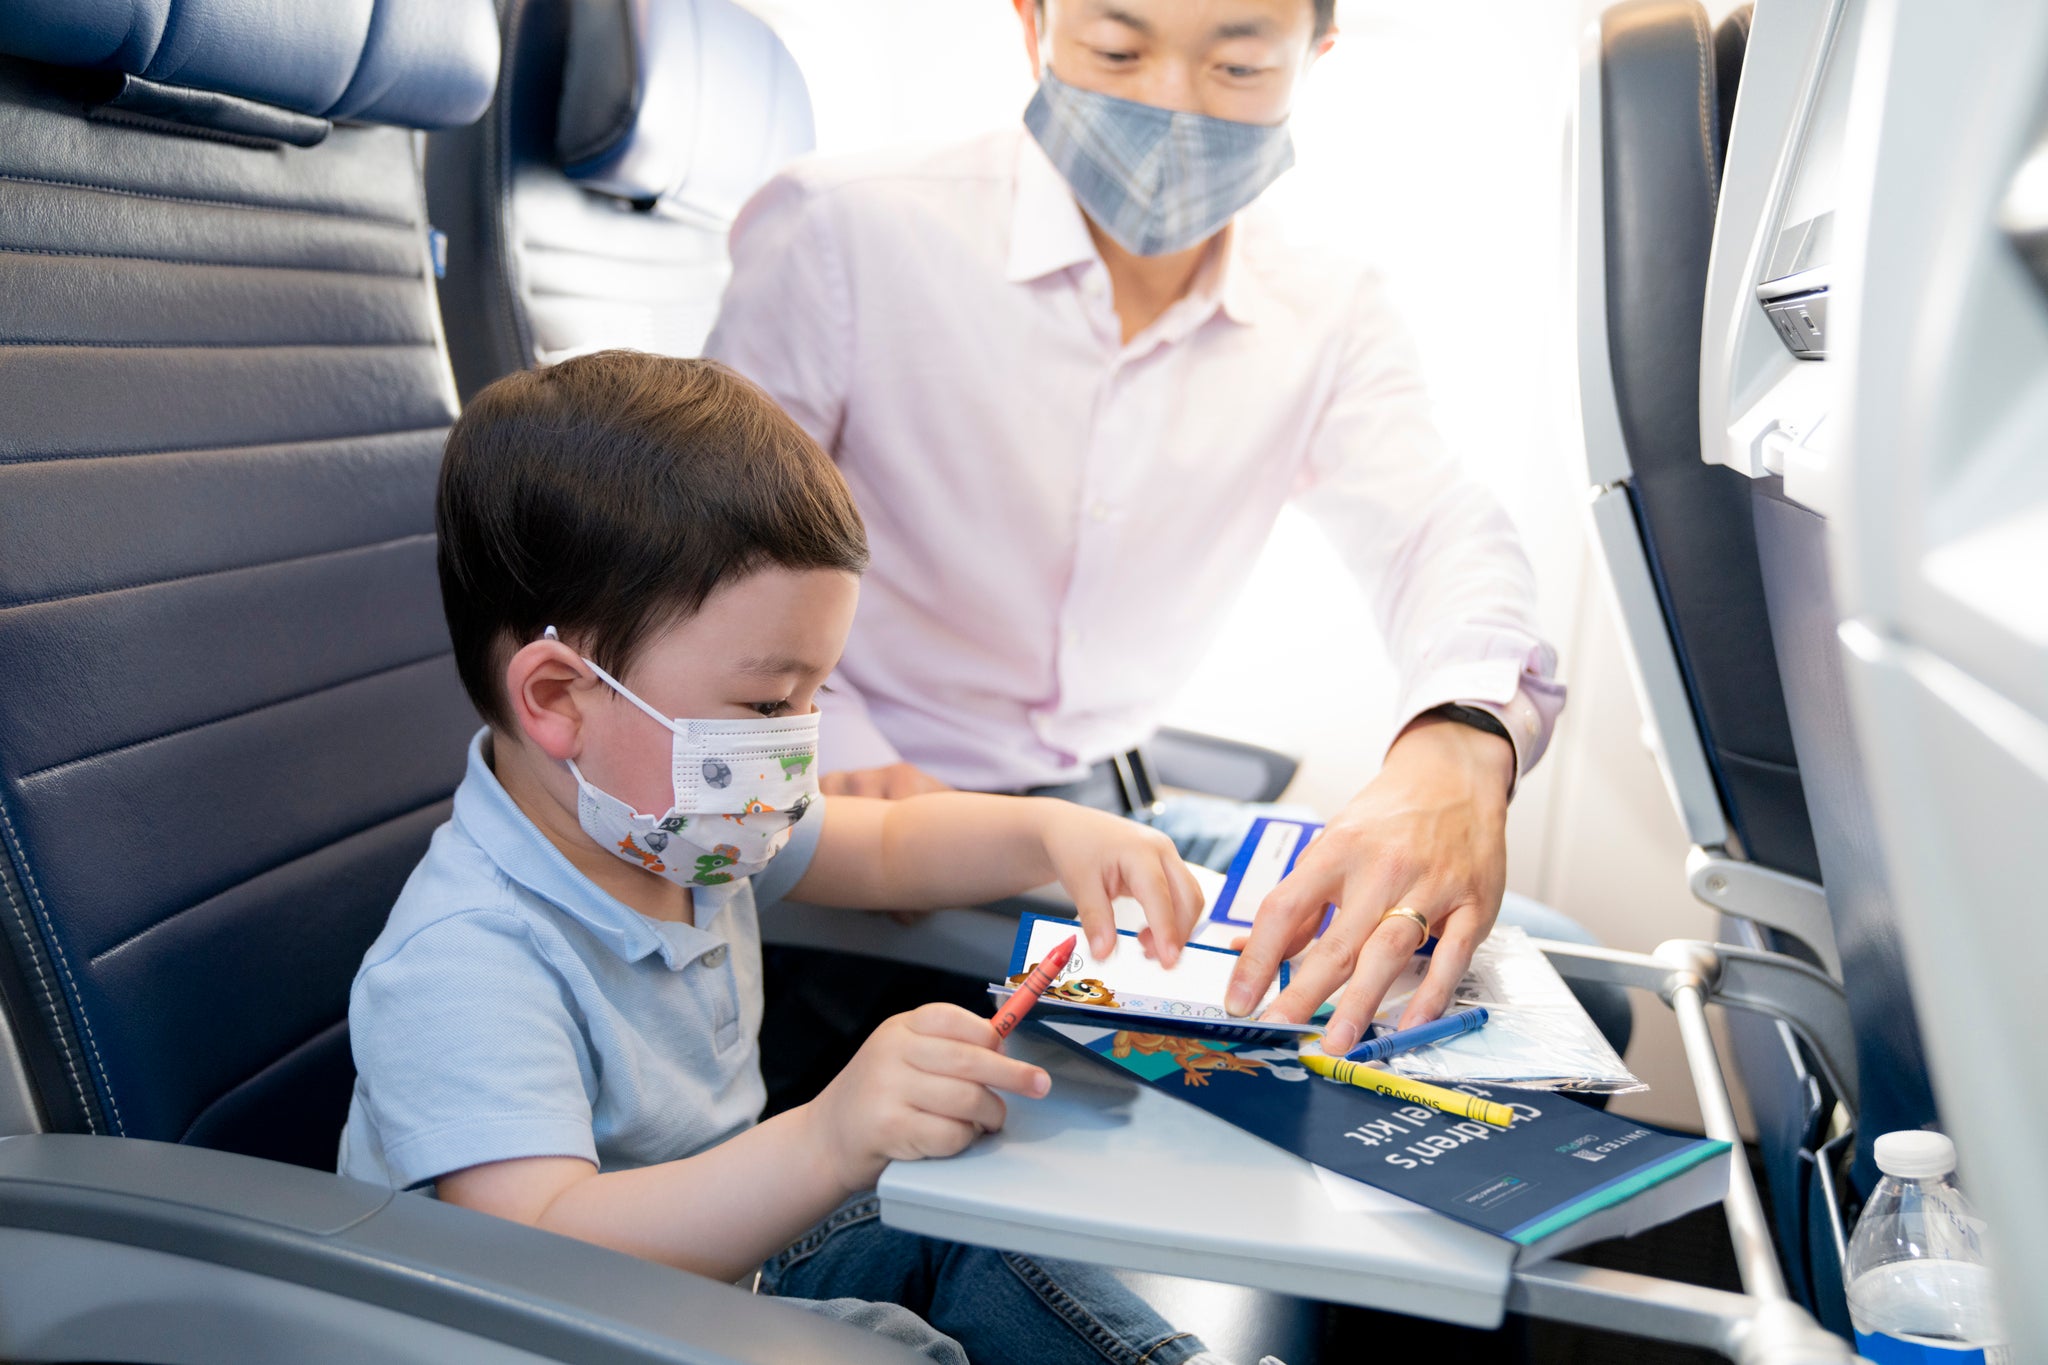 United Airlines Flight Fun Children’s Activity Bag NIP 